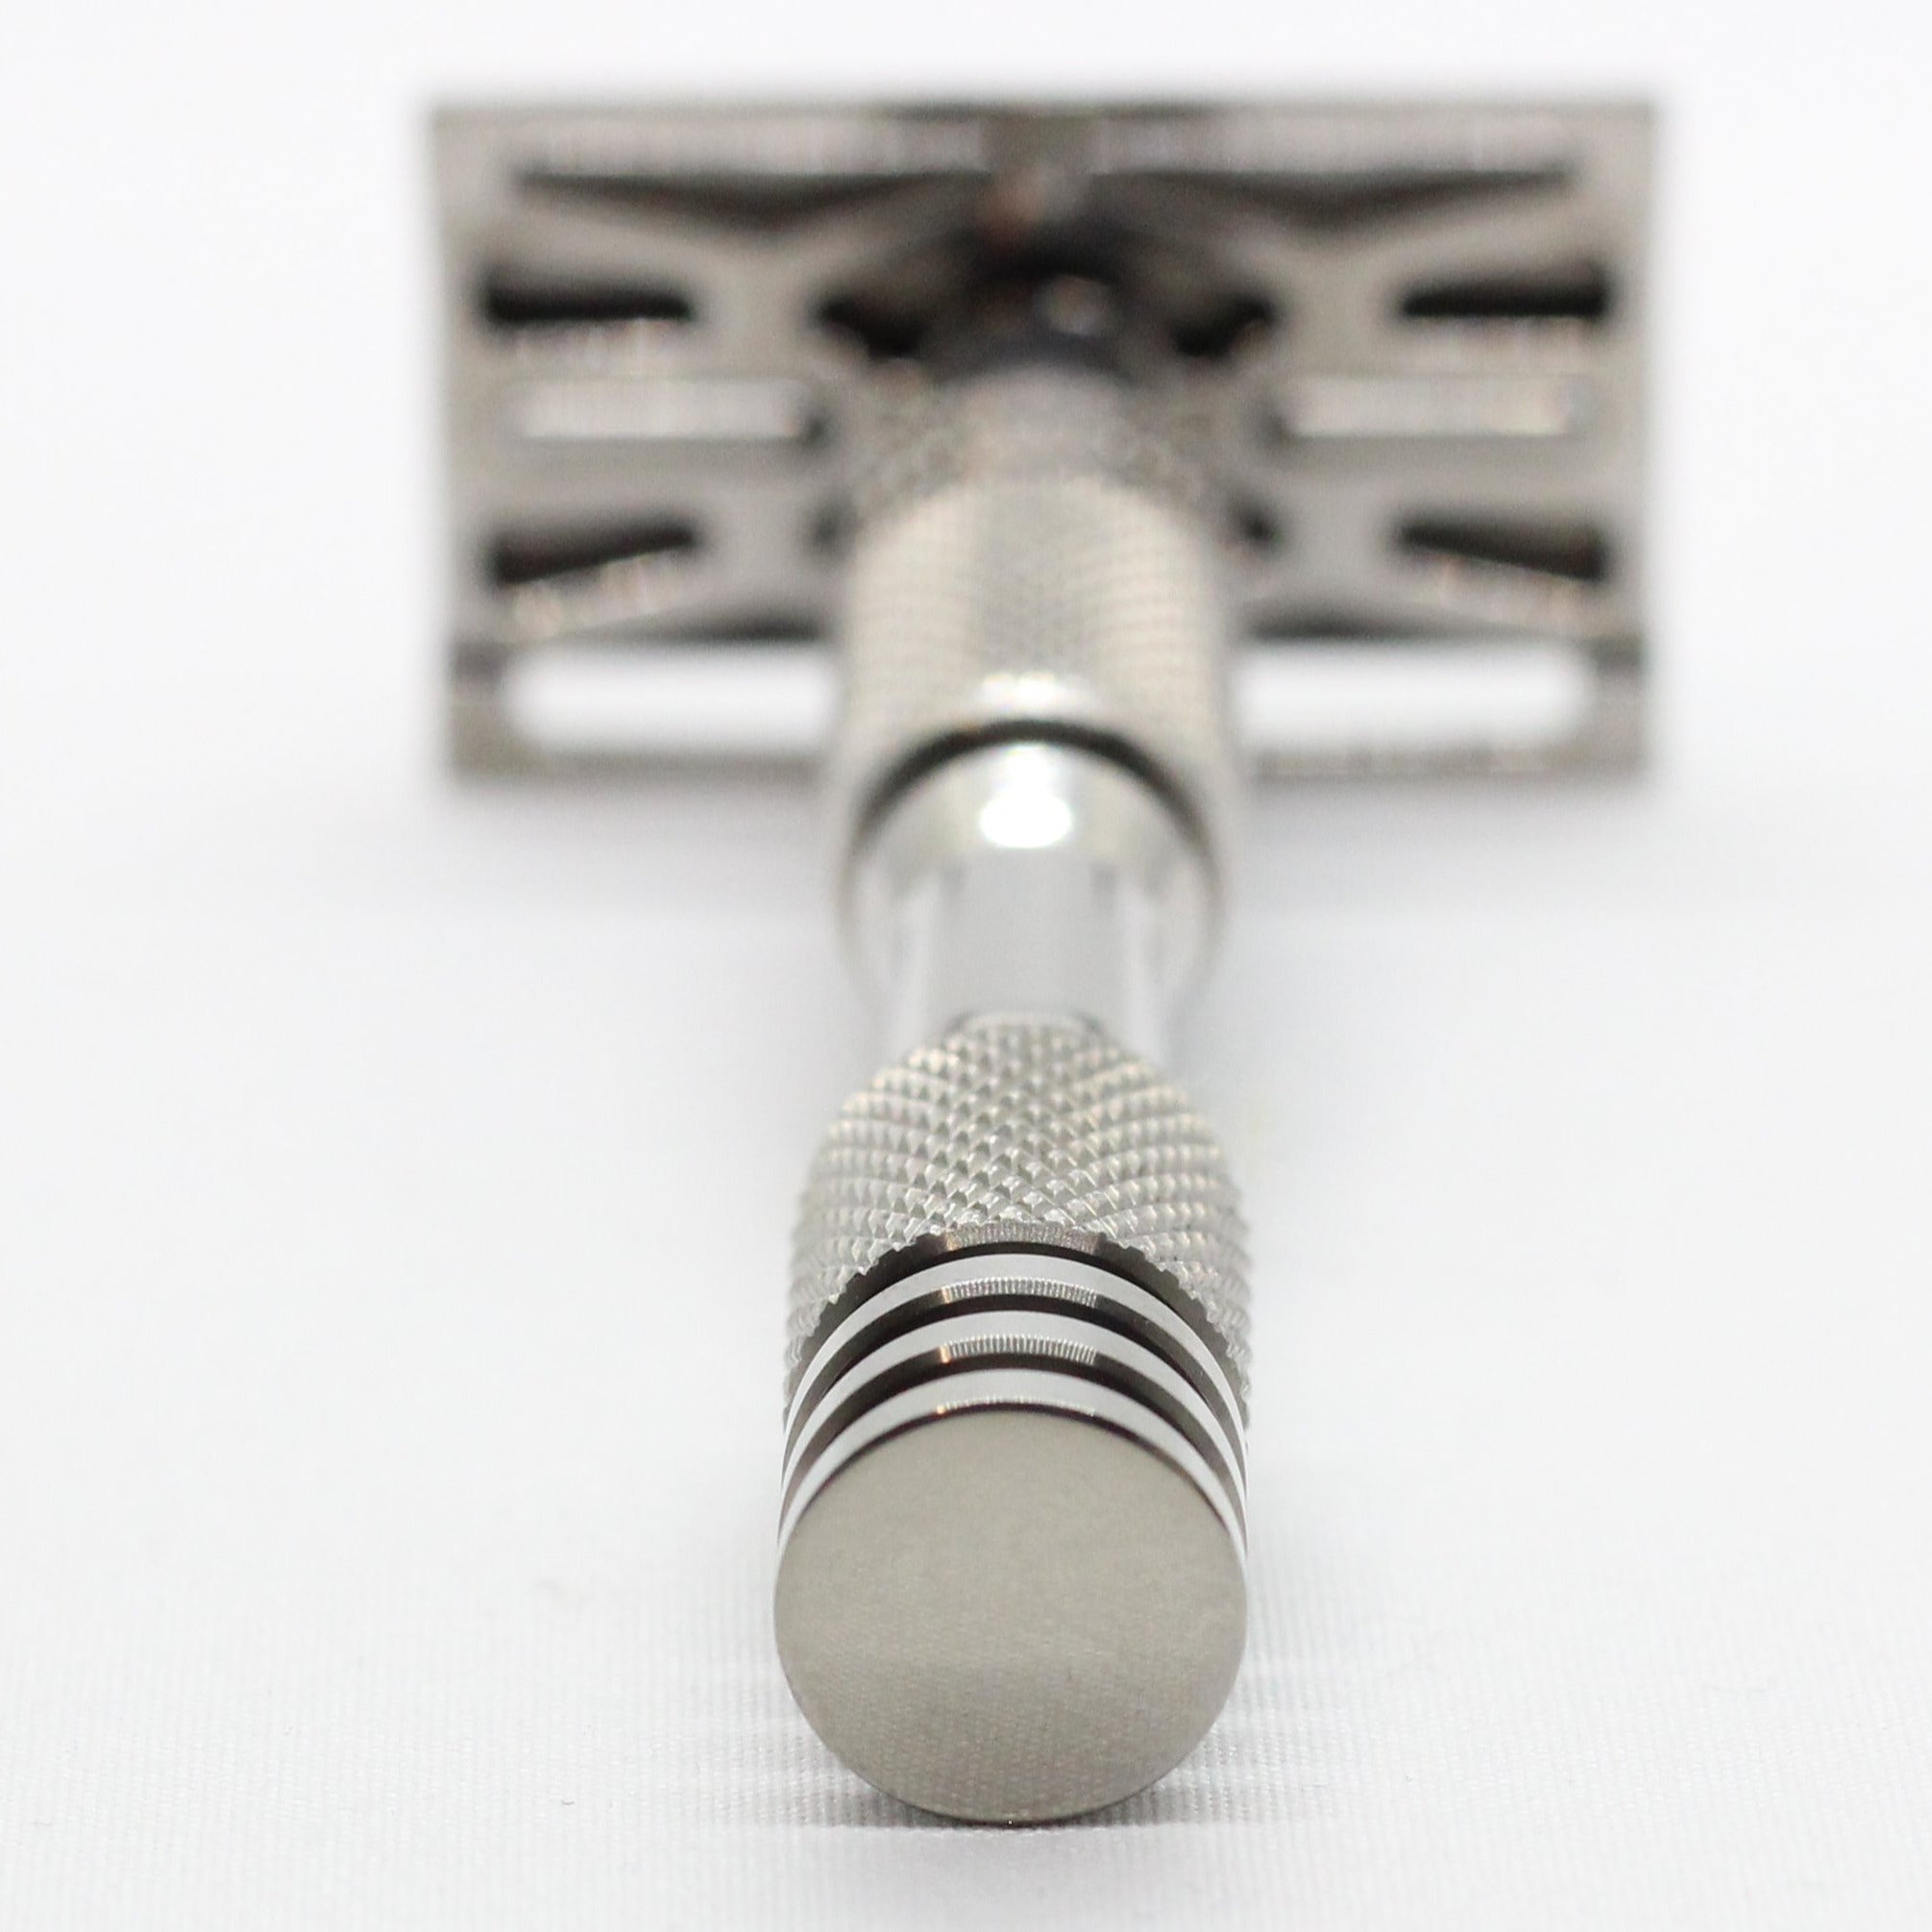 Bottom view of handle with knurling on handle view - Polished Titanium single edge razor / double edge safety razor shaving - web plate / wet shaving